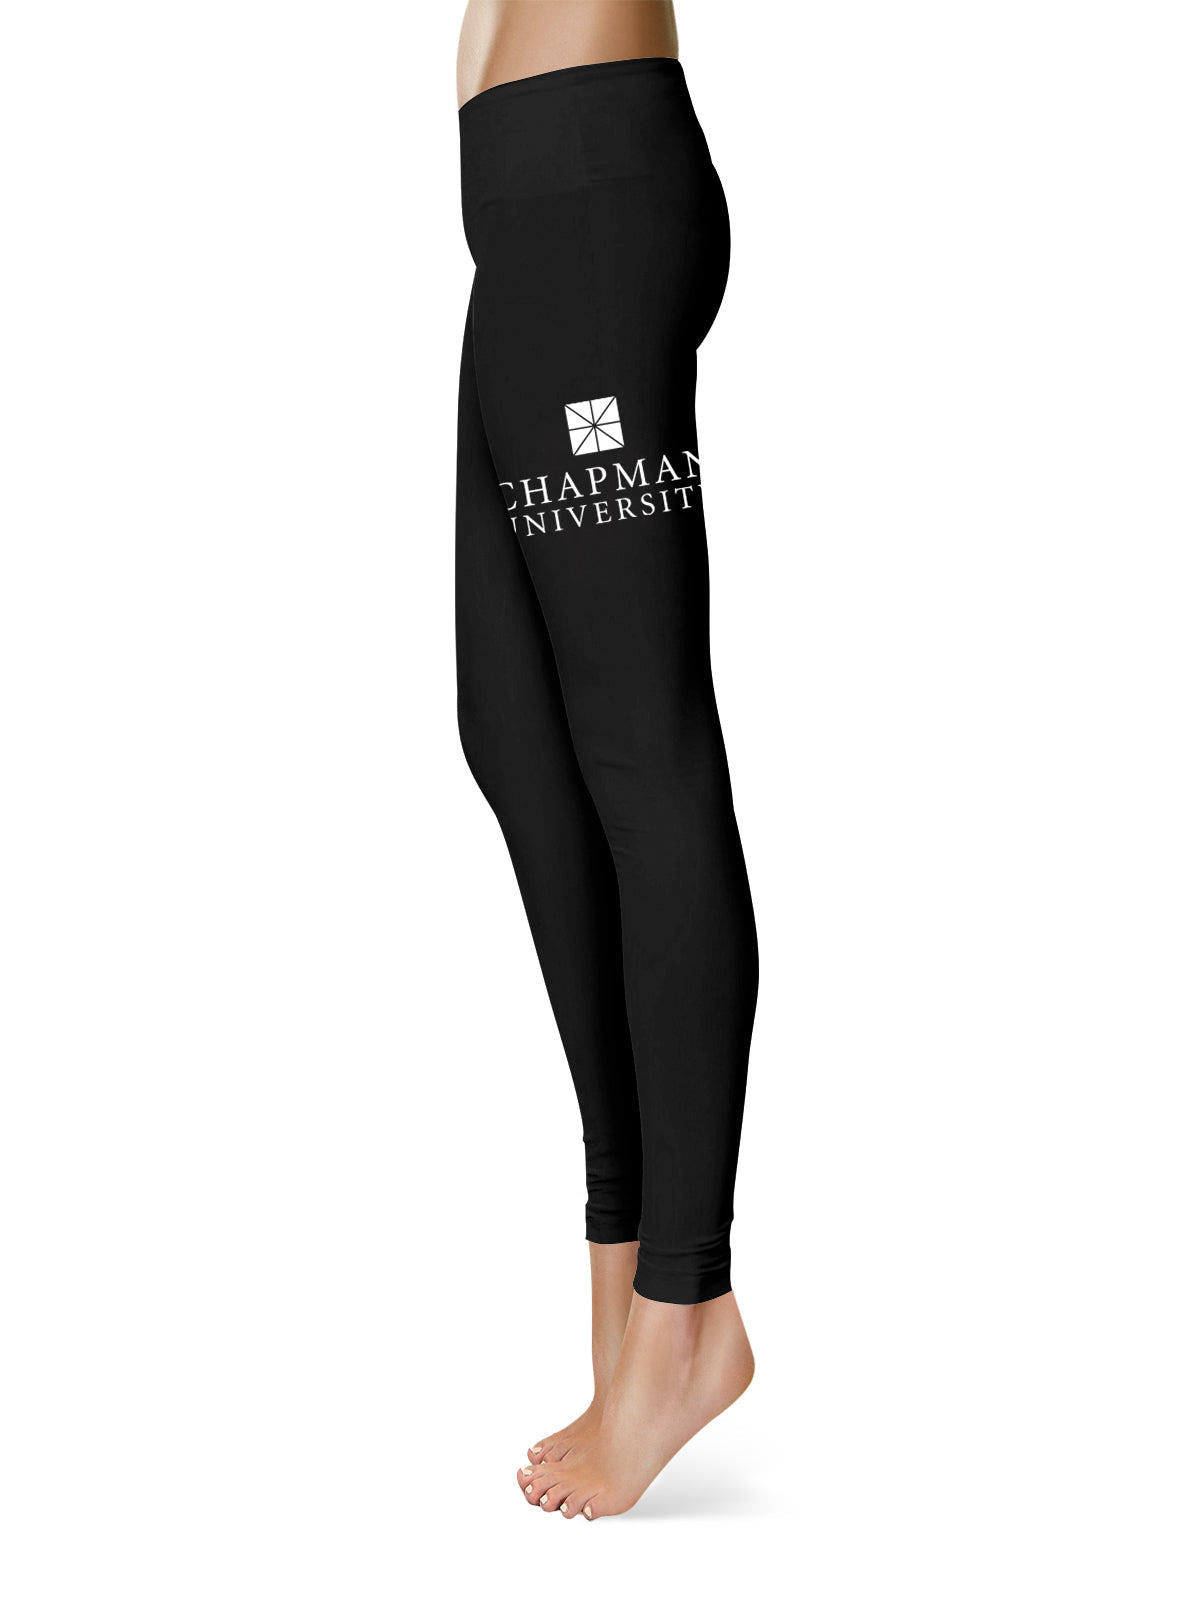 Chapman University Panthers Large Logo on Thigh Black Yoga Leggings for  Women 2.5 Waist Tights